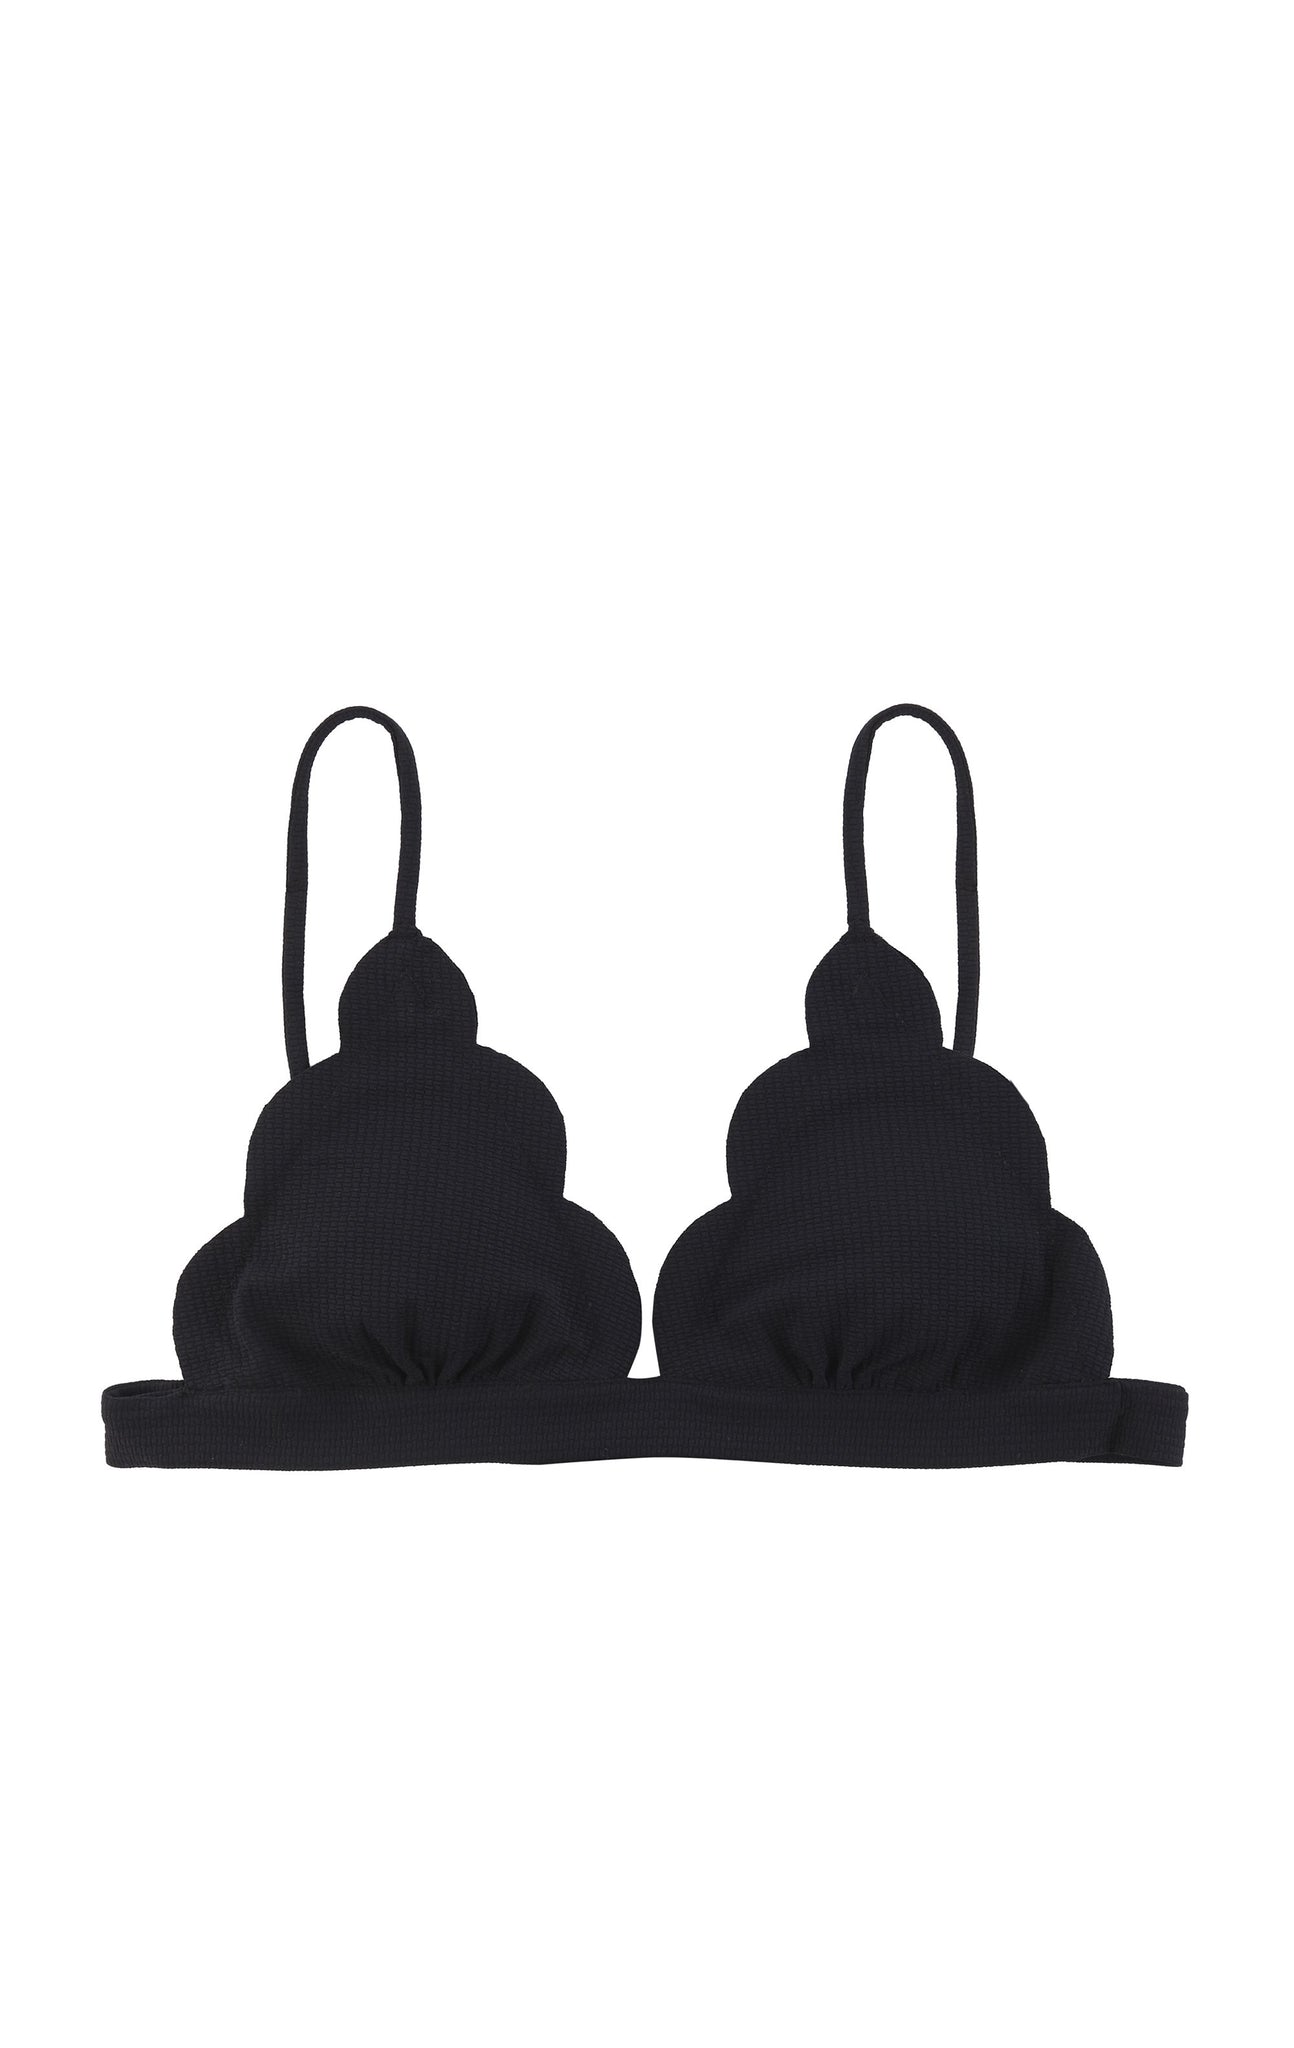 A designer triangle bikini top in black, with fixed straps and scalloped edges